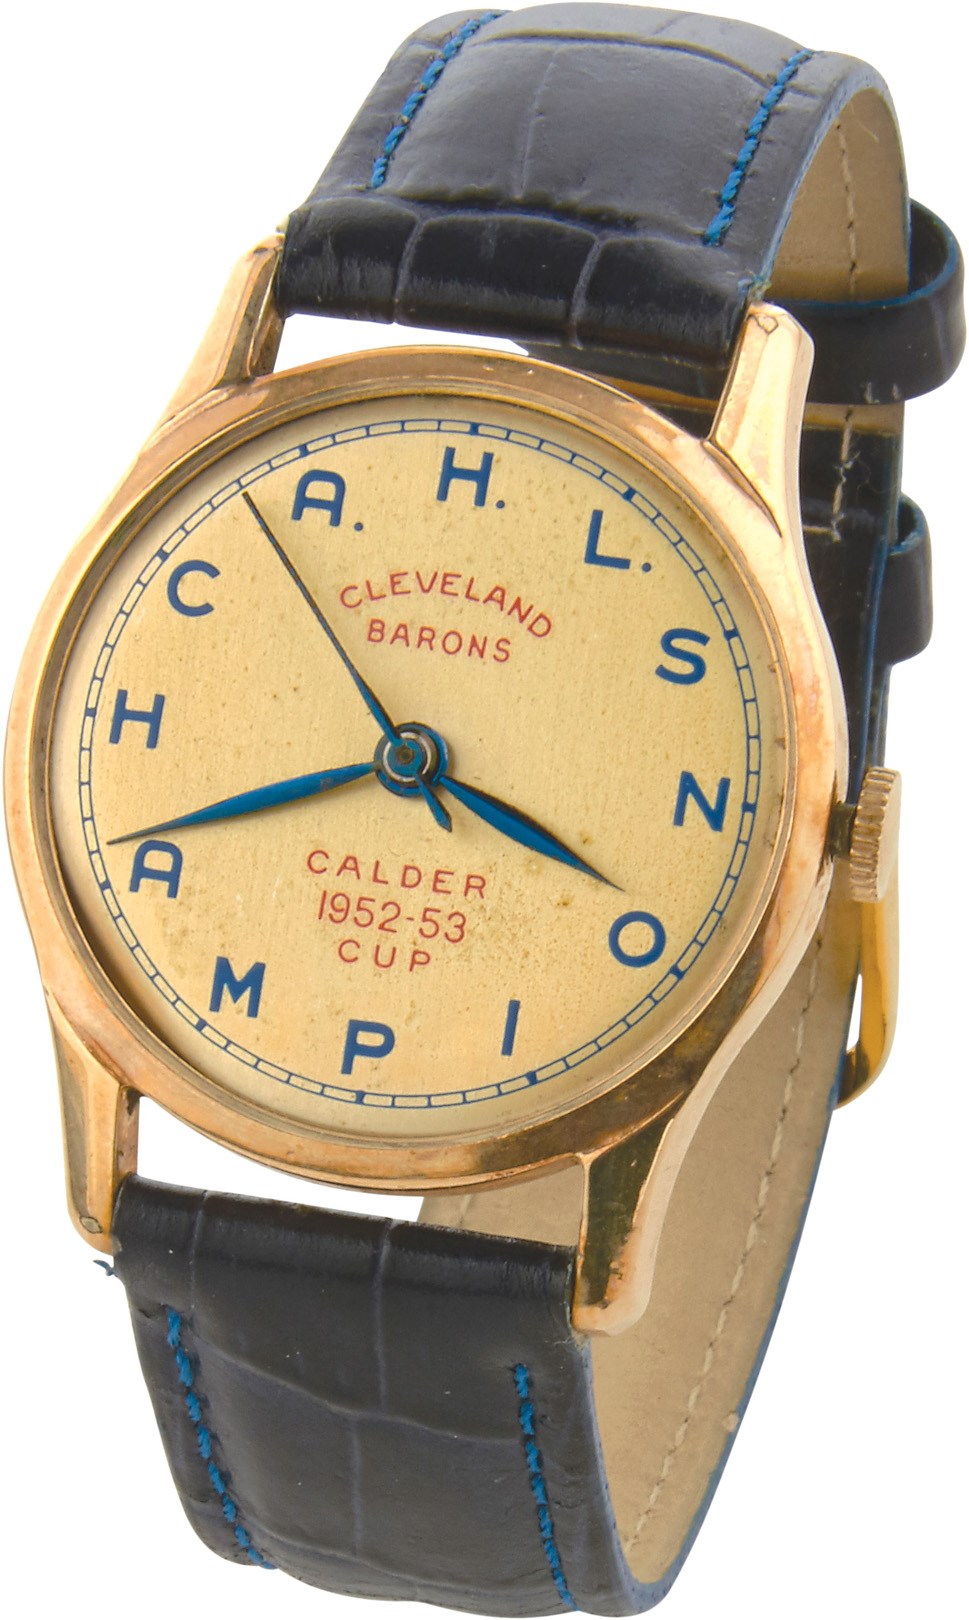 Hockey - 1952-53 Cleveland Barons Calder Cup Championship Watch